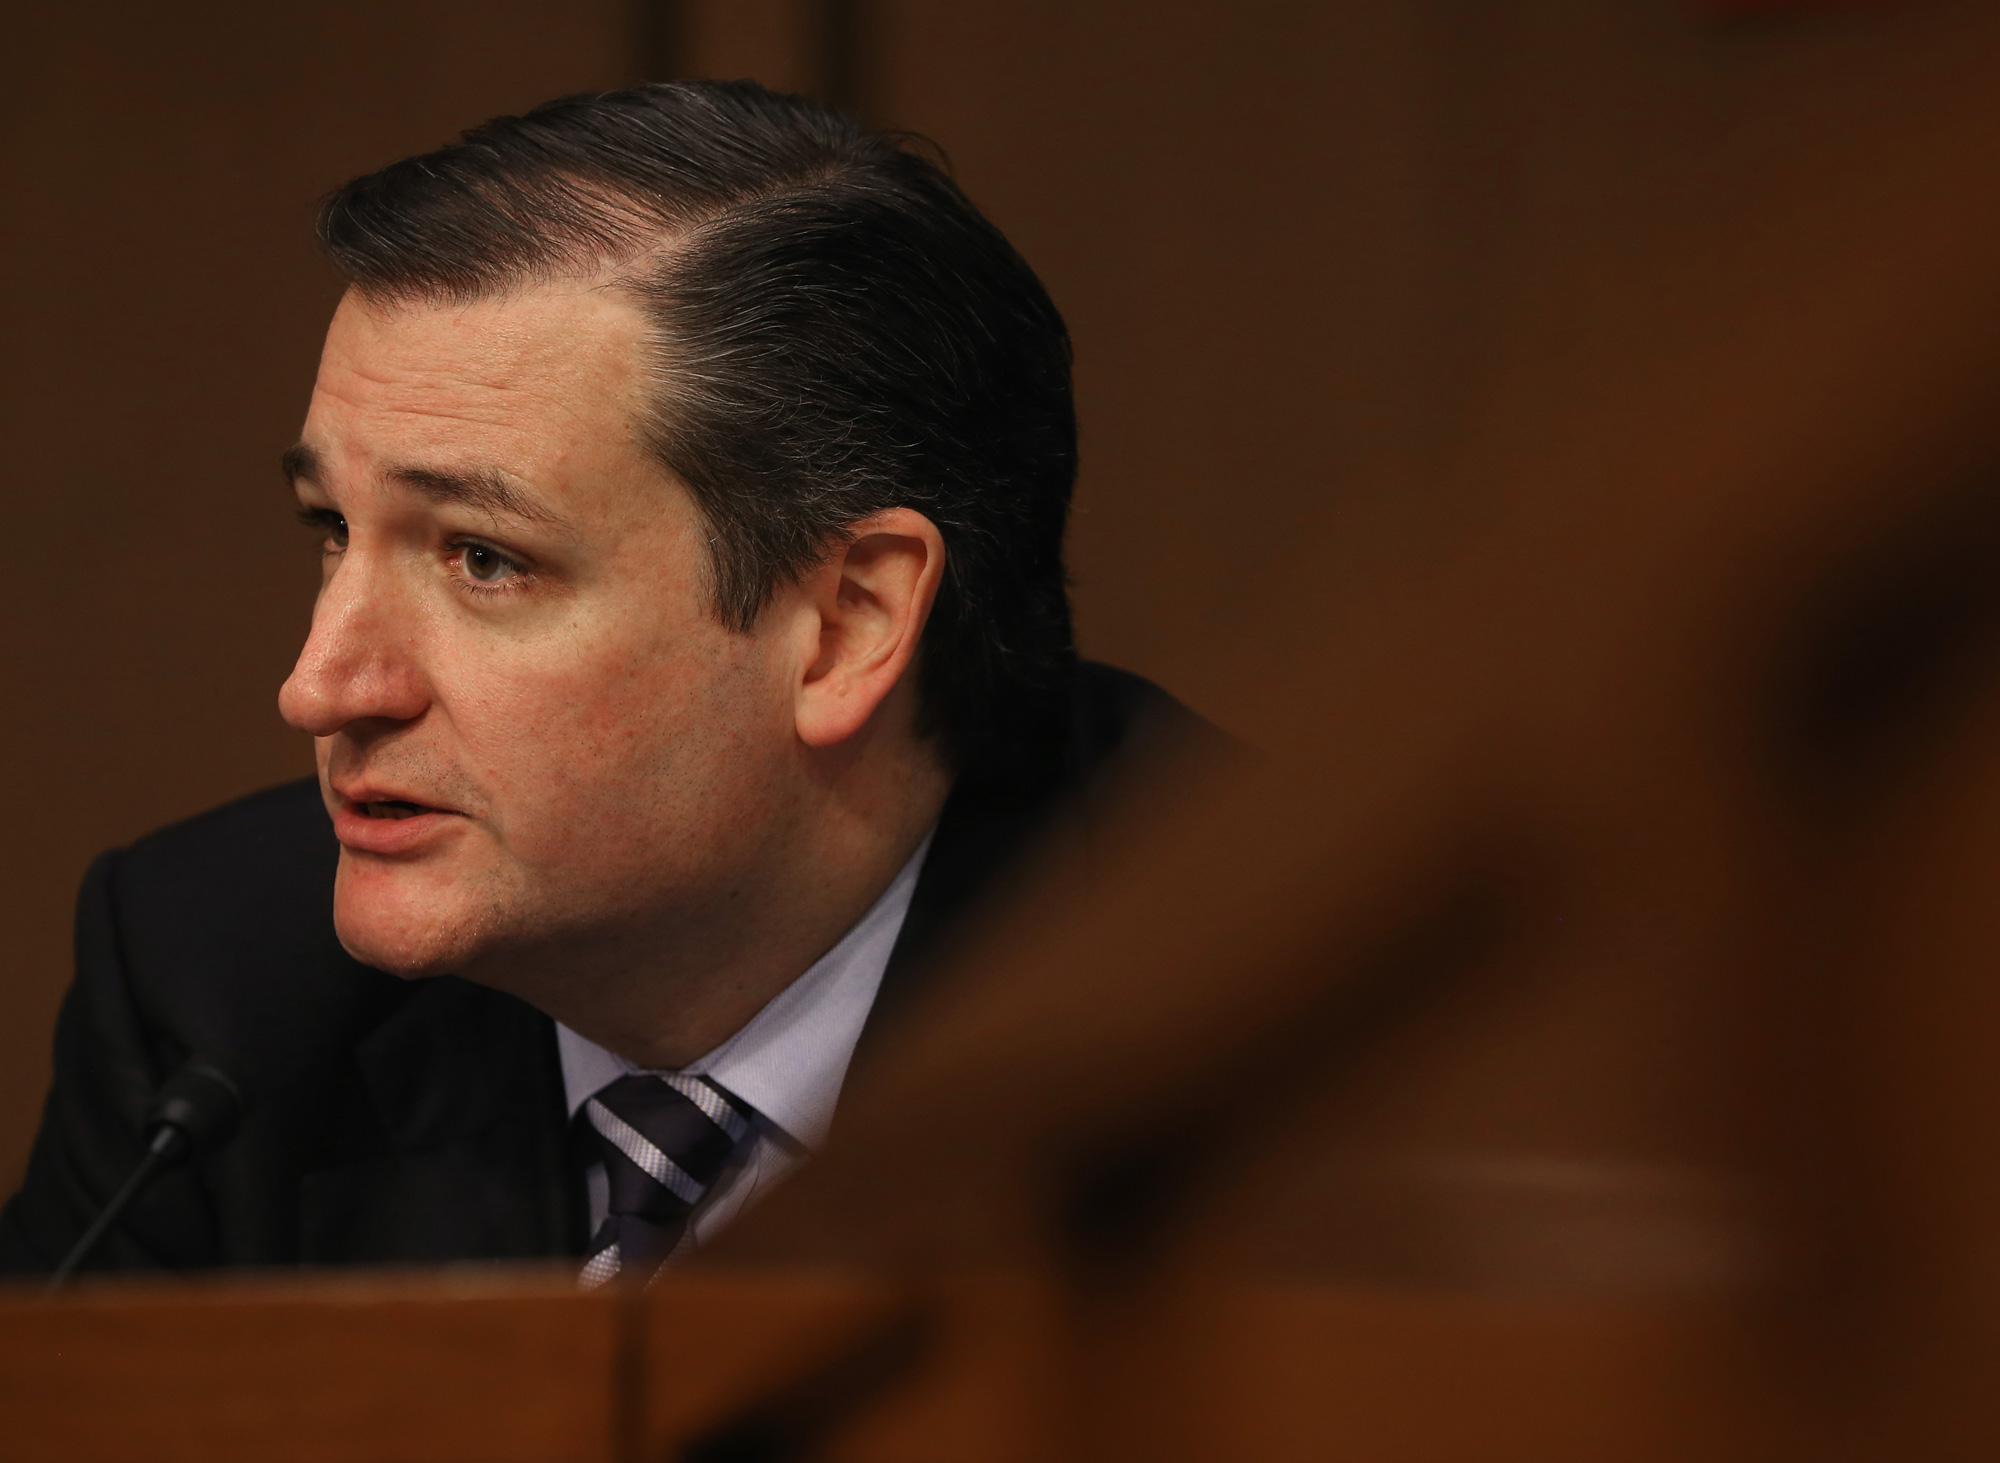 Senator Ted Cruz of Texas convened the hearing on the future of AI.